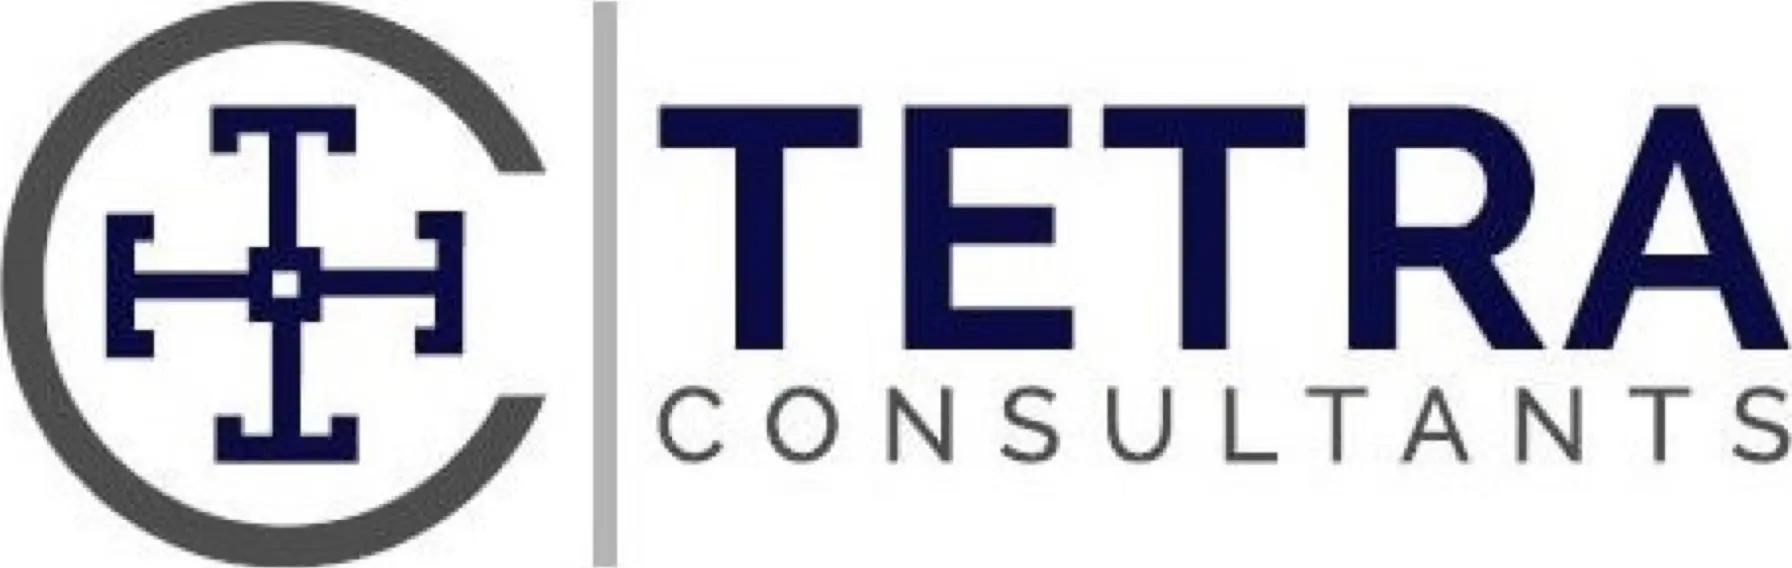 Tetra Consultants